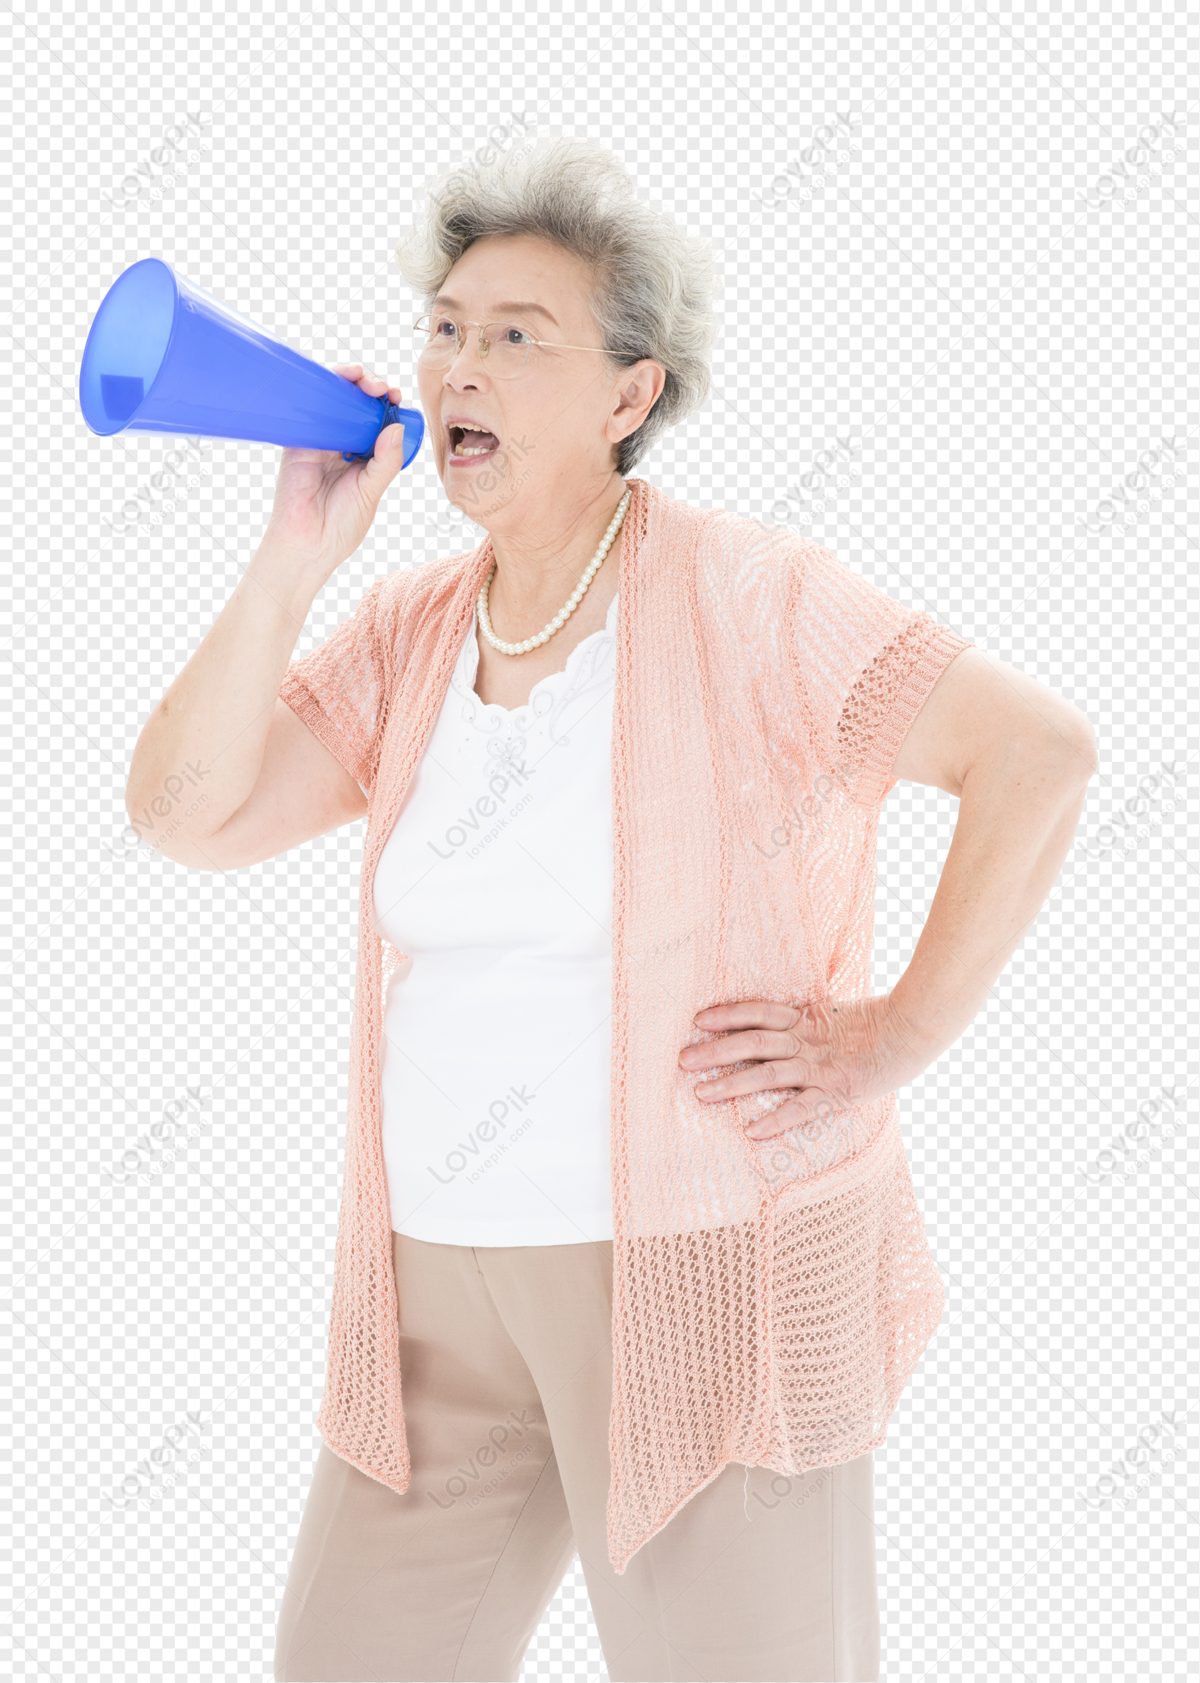 Почему бабушка кричит. Бабка кричит. Бабушка орёт в телефон. Орущая бабка на прозрачном фоне.